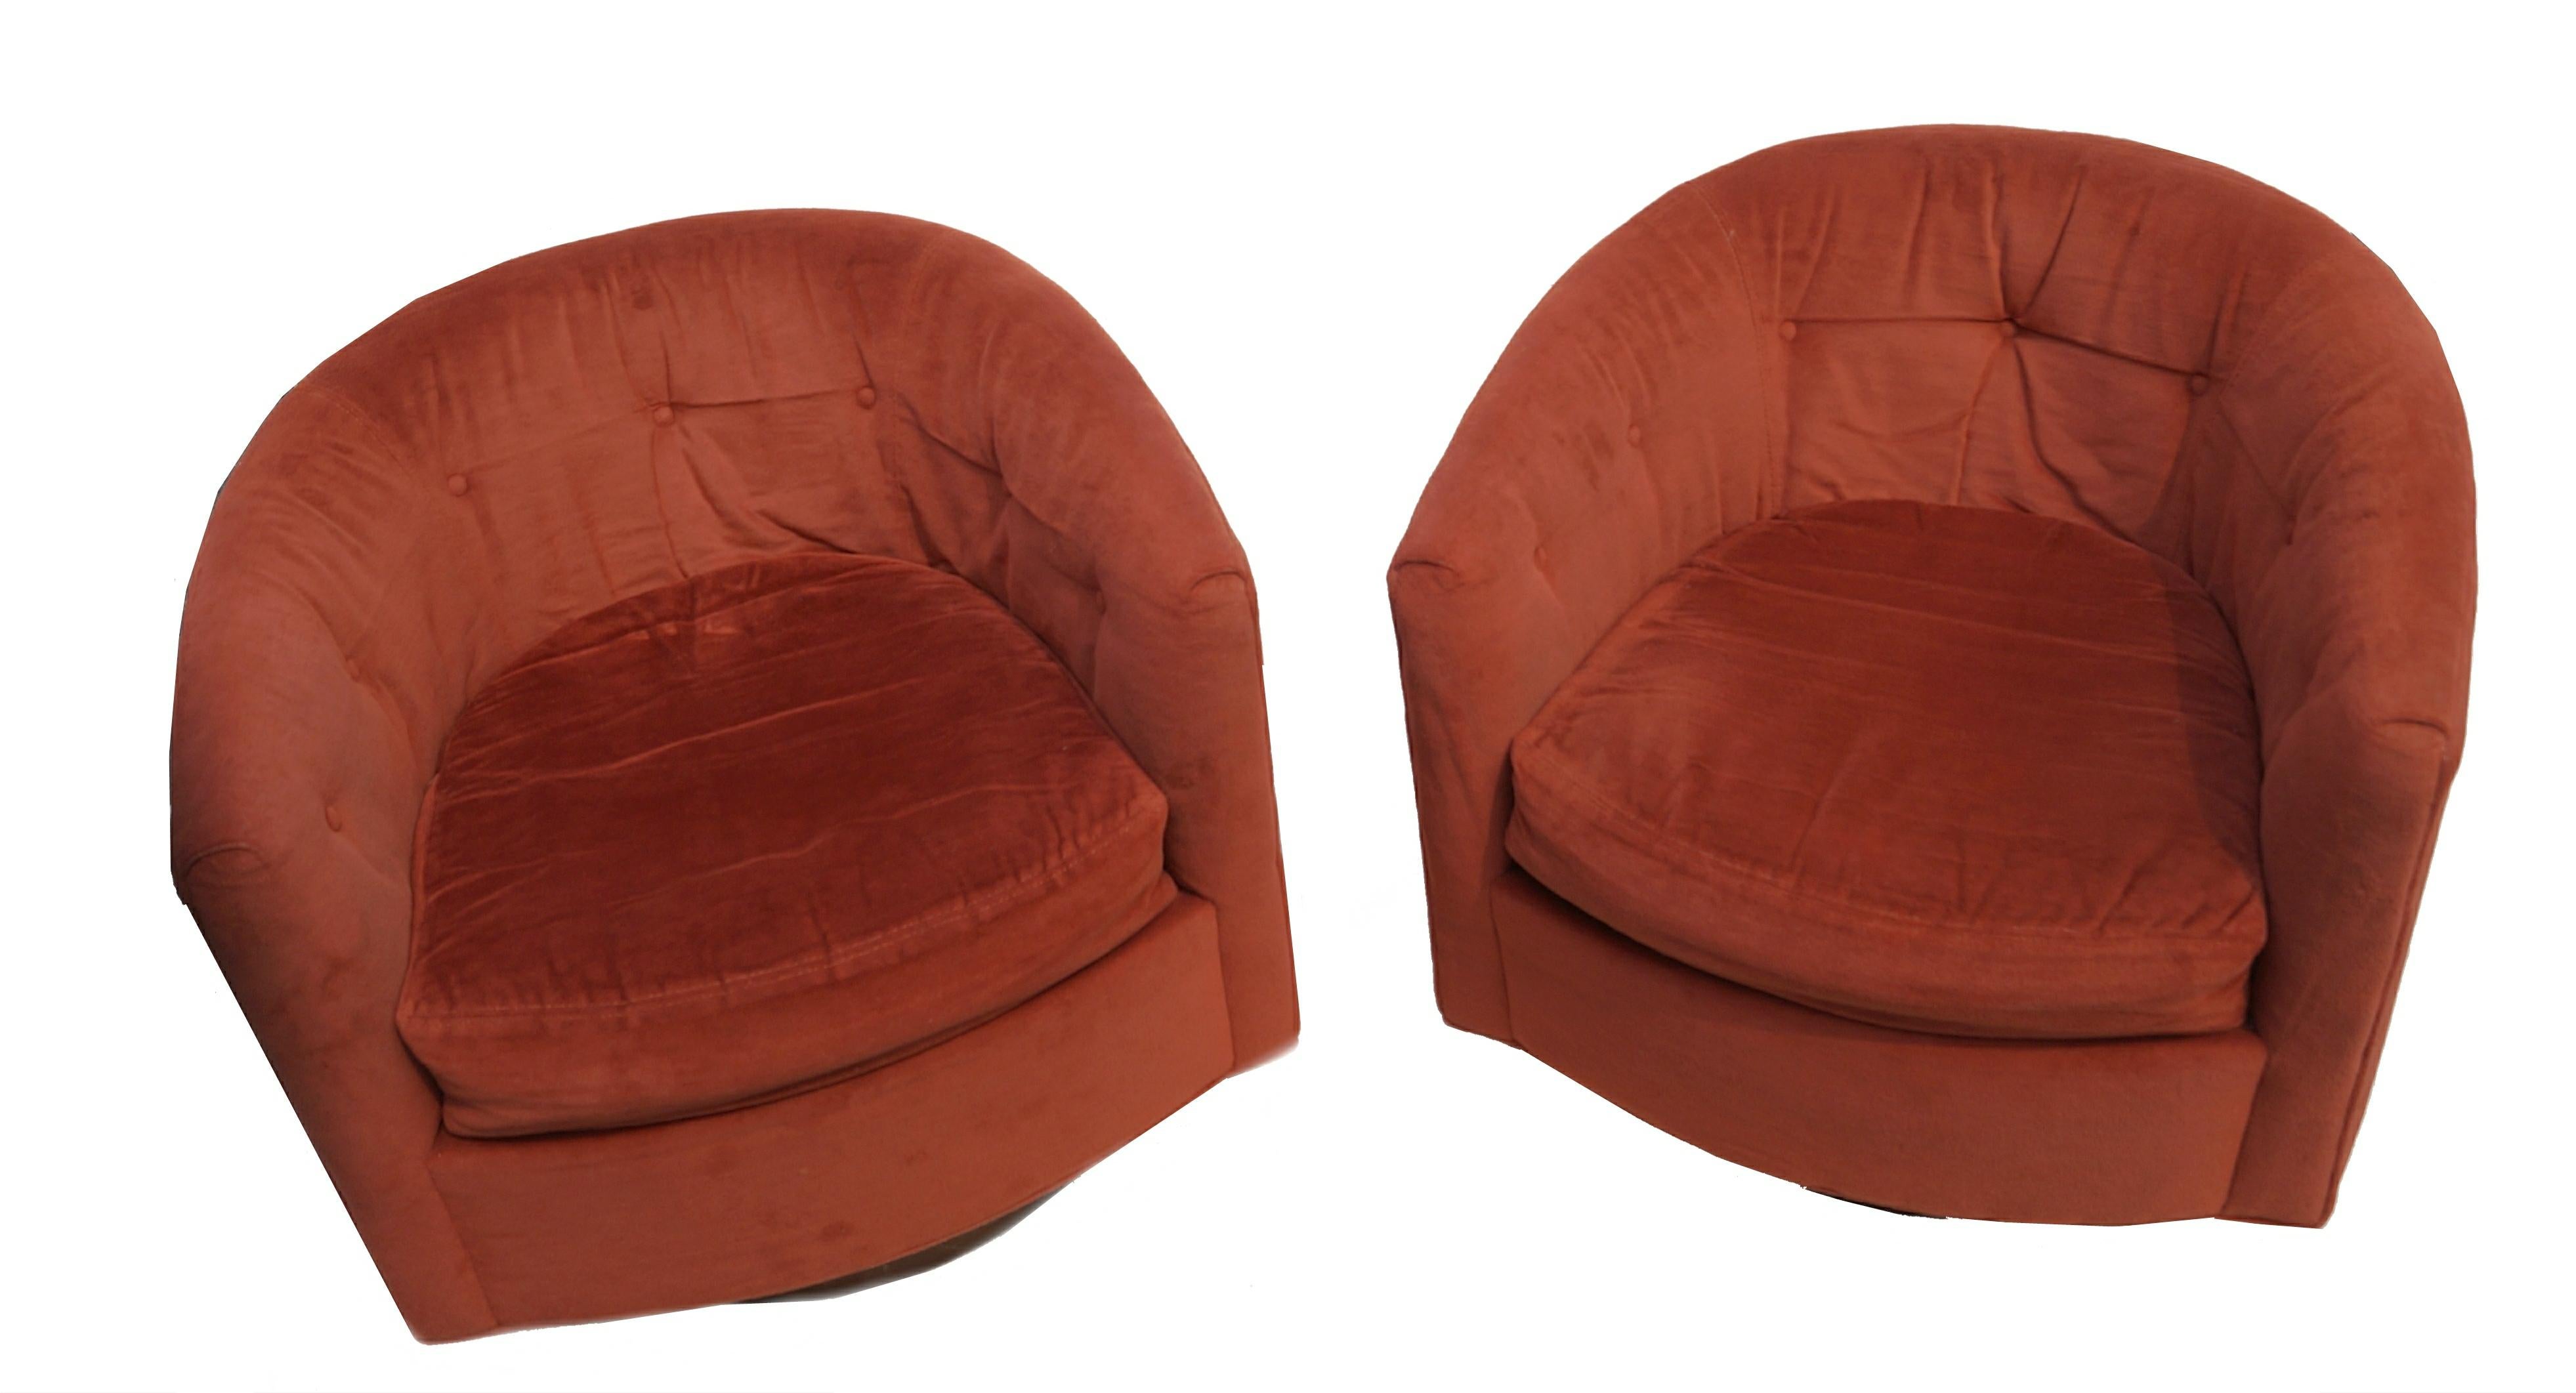 Pair of Mid-Century Modern tilt & swivel lounge chairs manner of Milo Baughman.